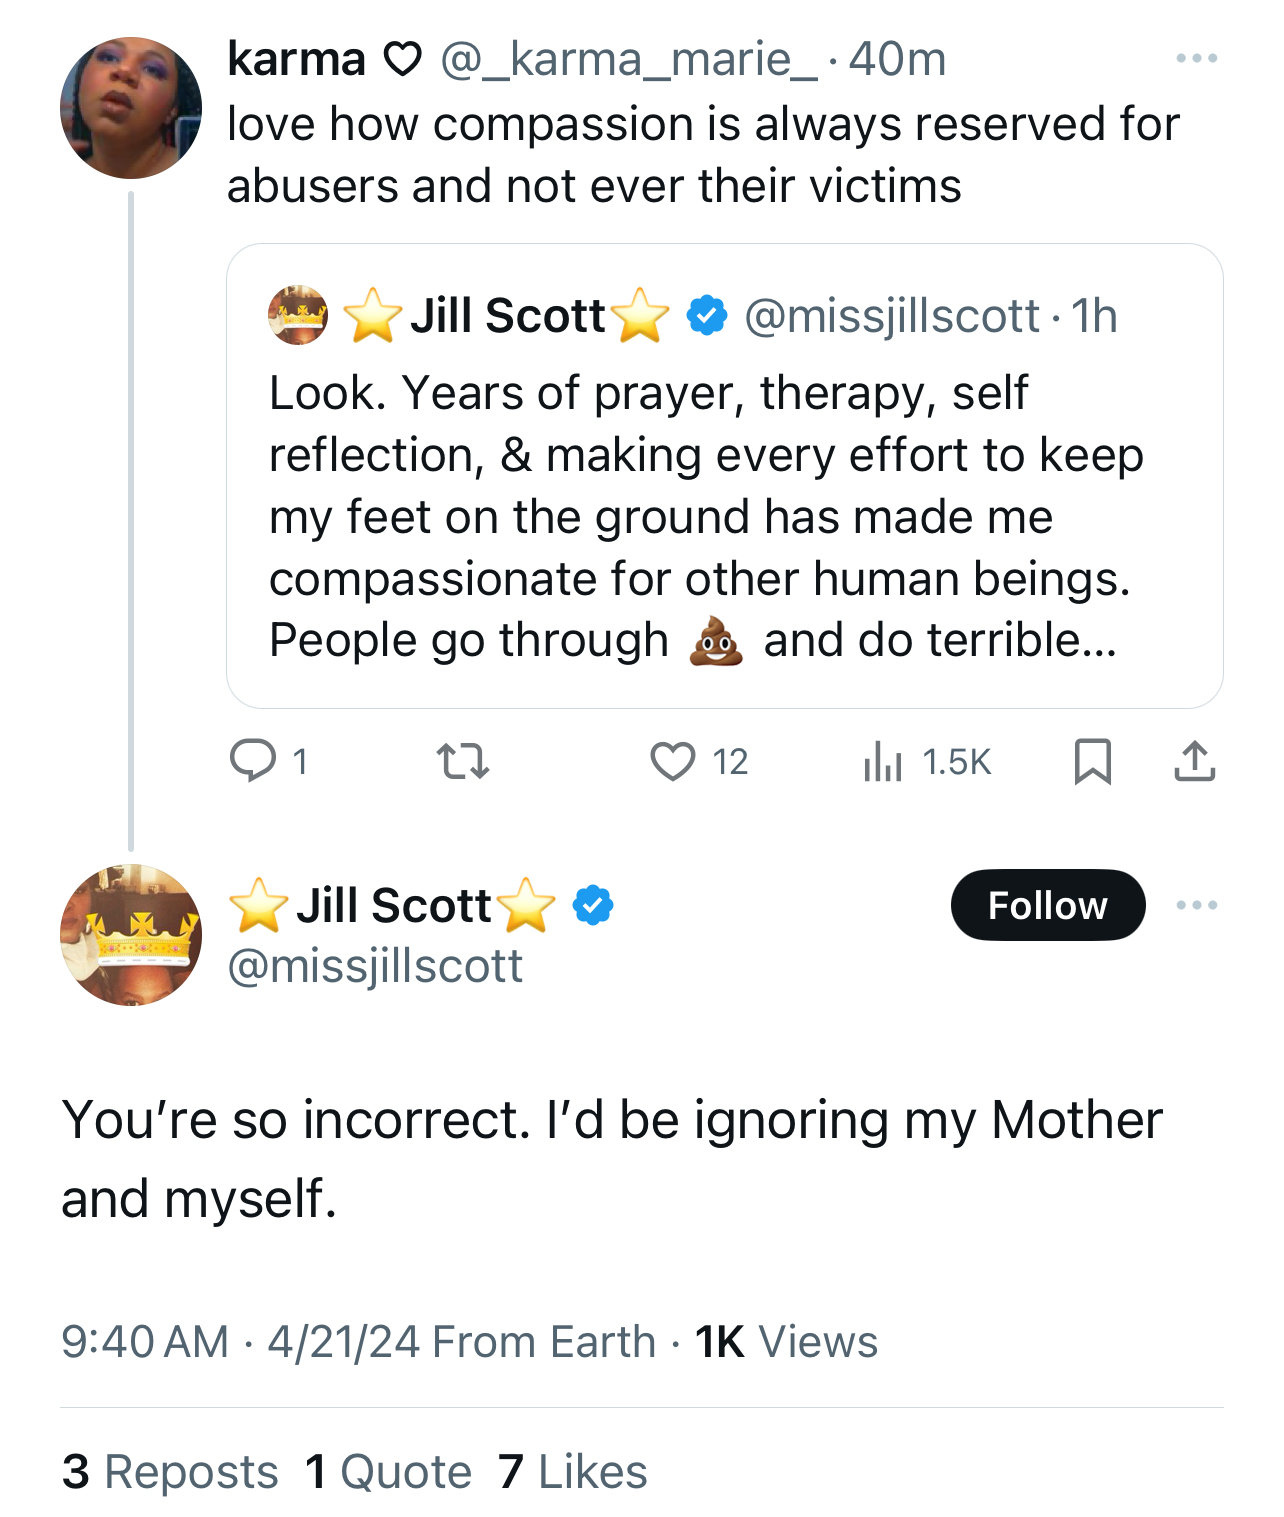 Screenshot of a tweet exchange between users, discussing compassion and a misunderstanding involving Jill Scott